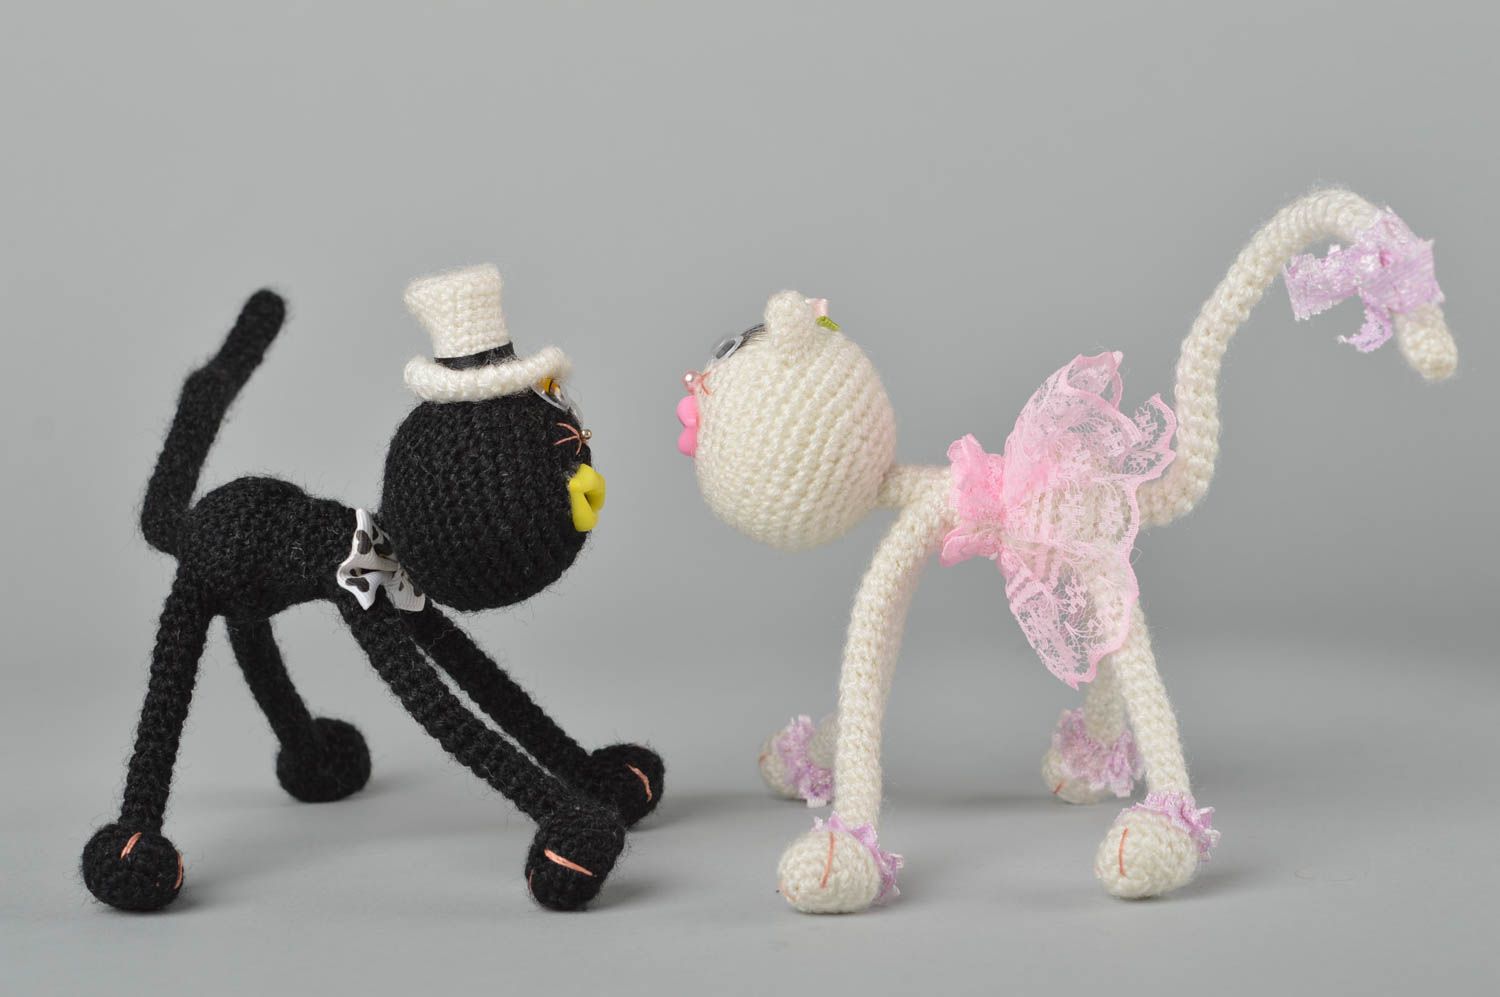 Handmade crocheted toys creative toys for children trendy toys nursery decor photo 5